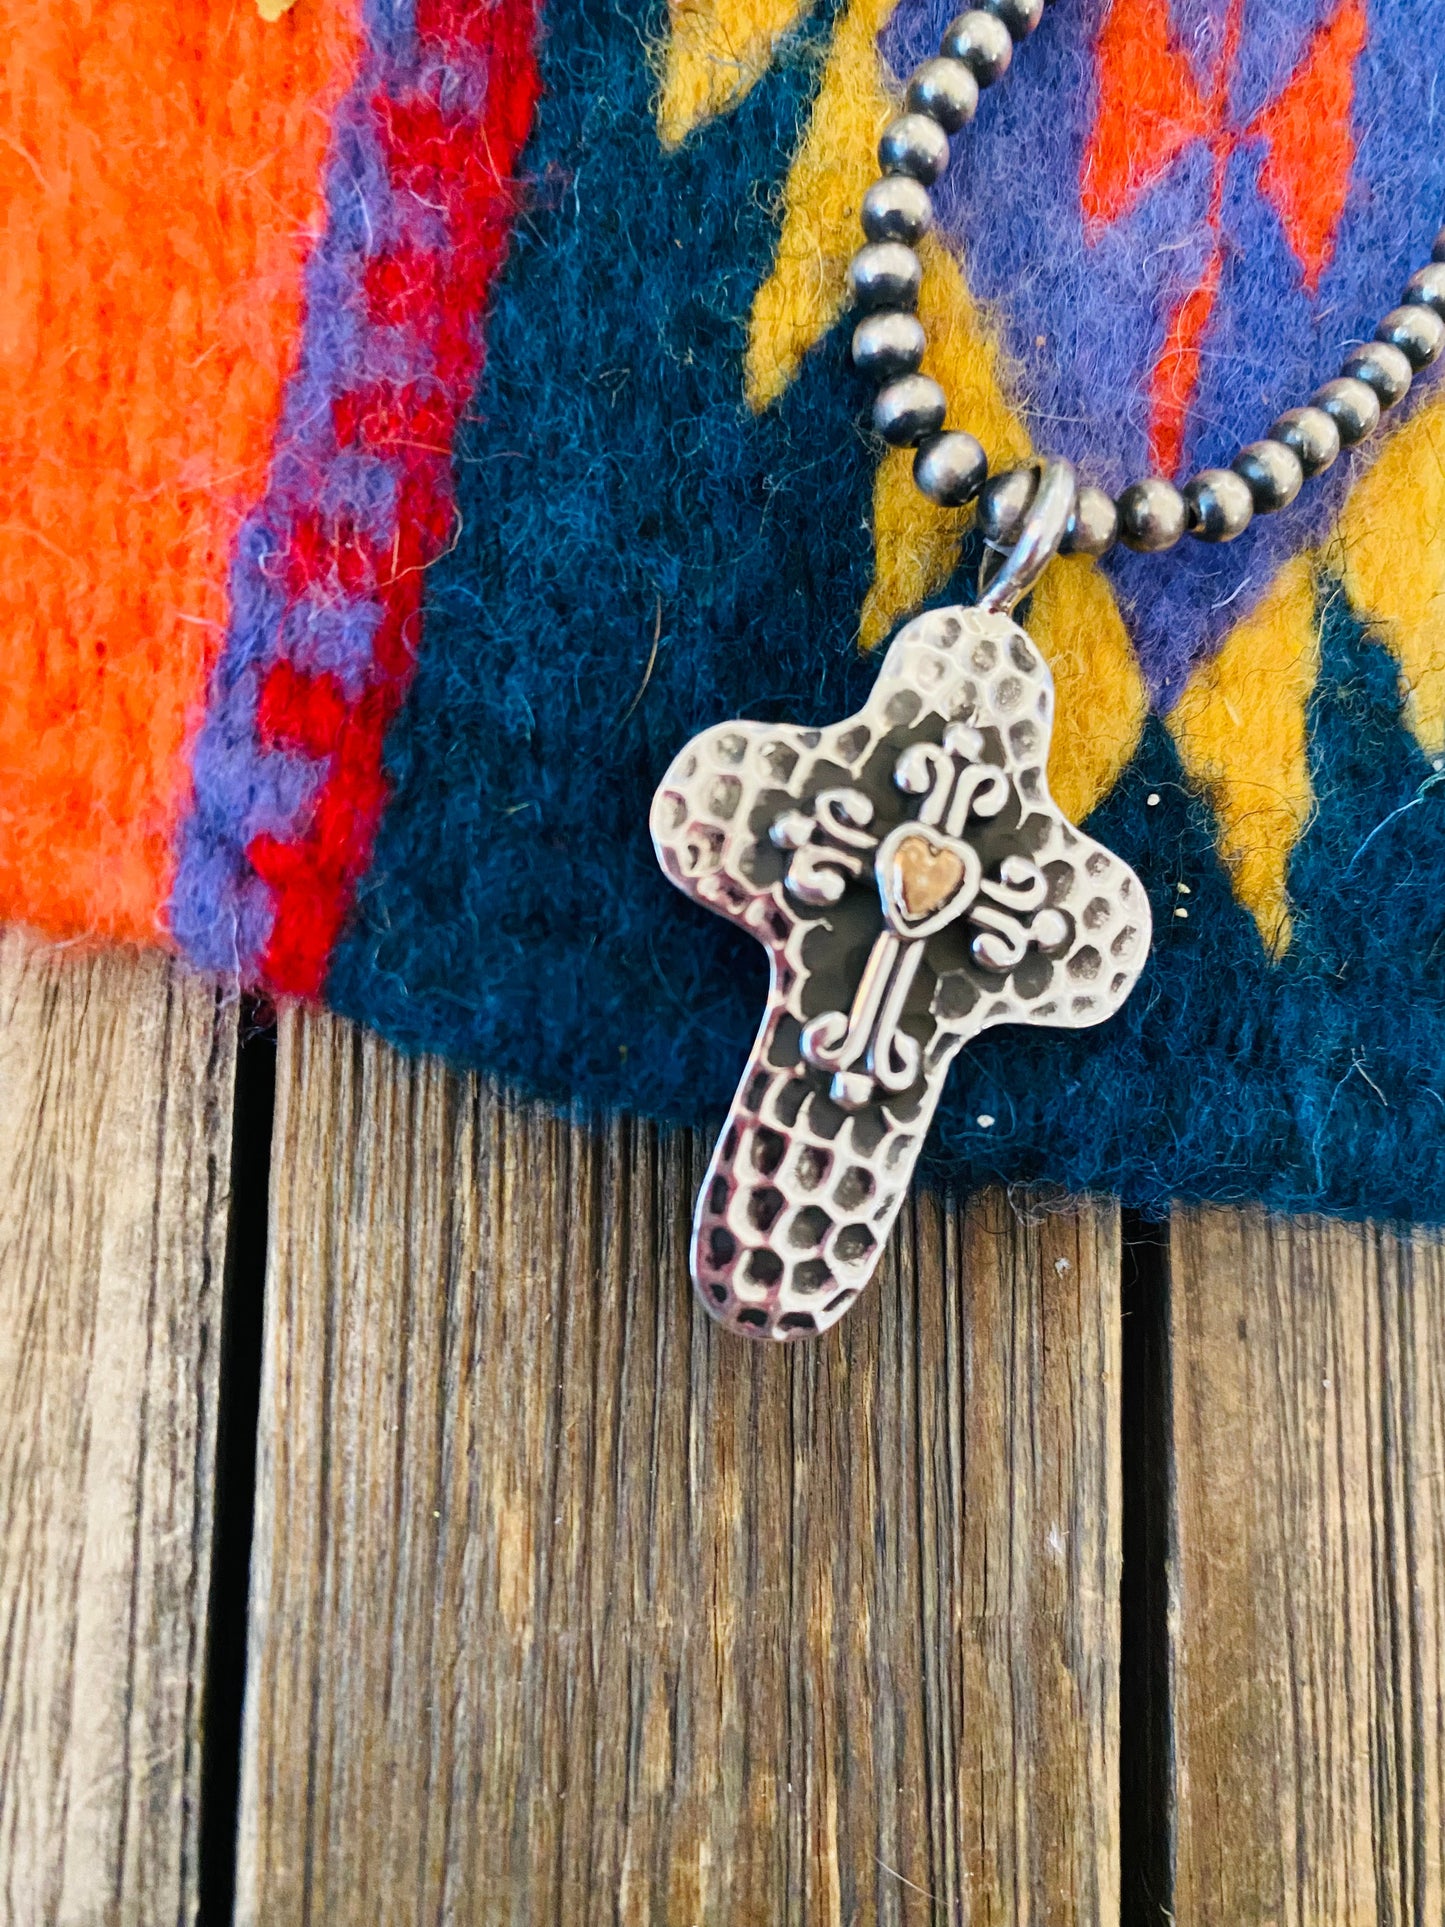 Navajo Sterling Silver & Copper Cross Pendant